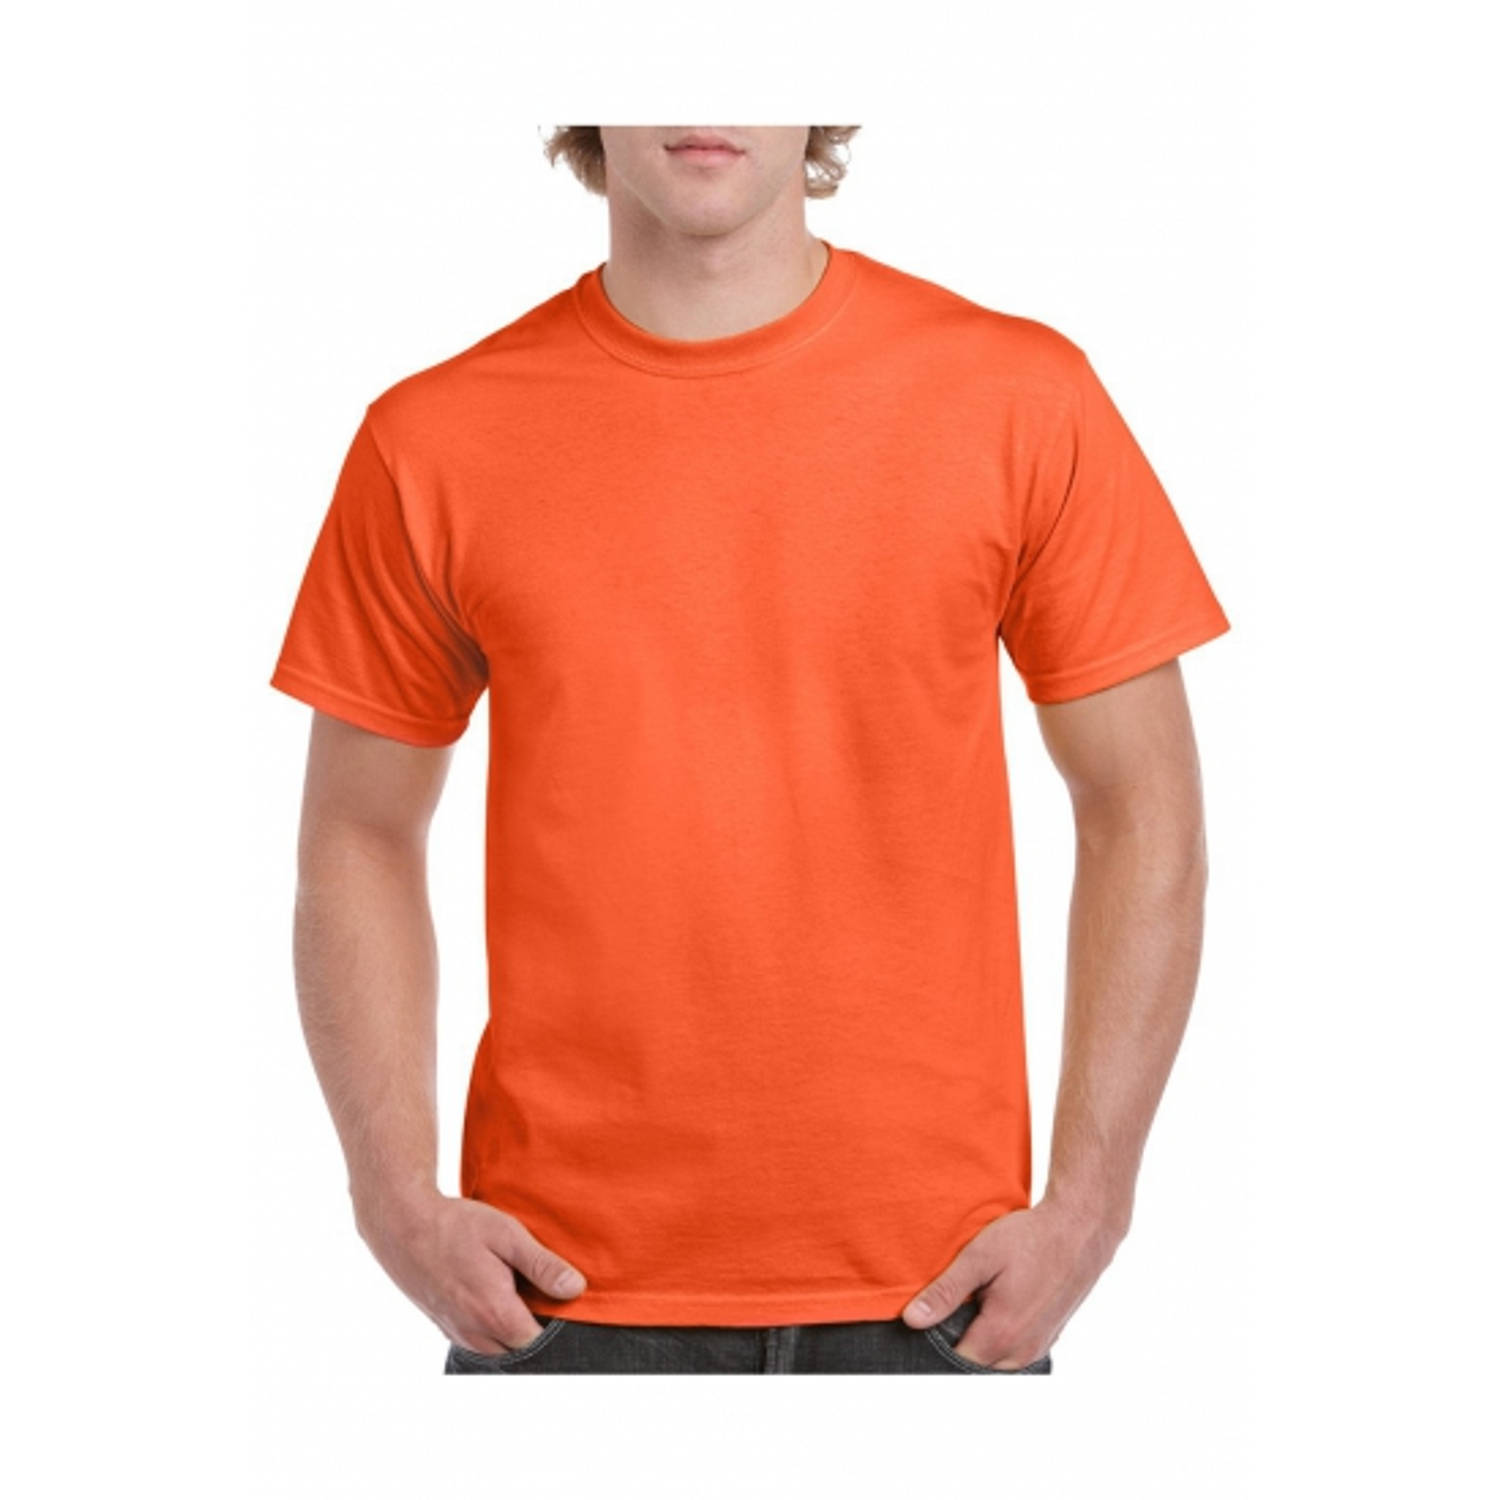 Beperkt Terug, terug, terug deel verfrommeld Oranje t-shirts voordelig L - Feestshirts | Blokker